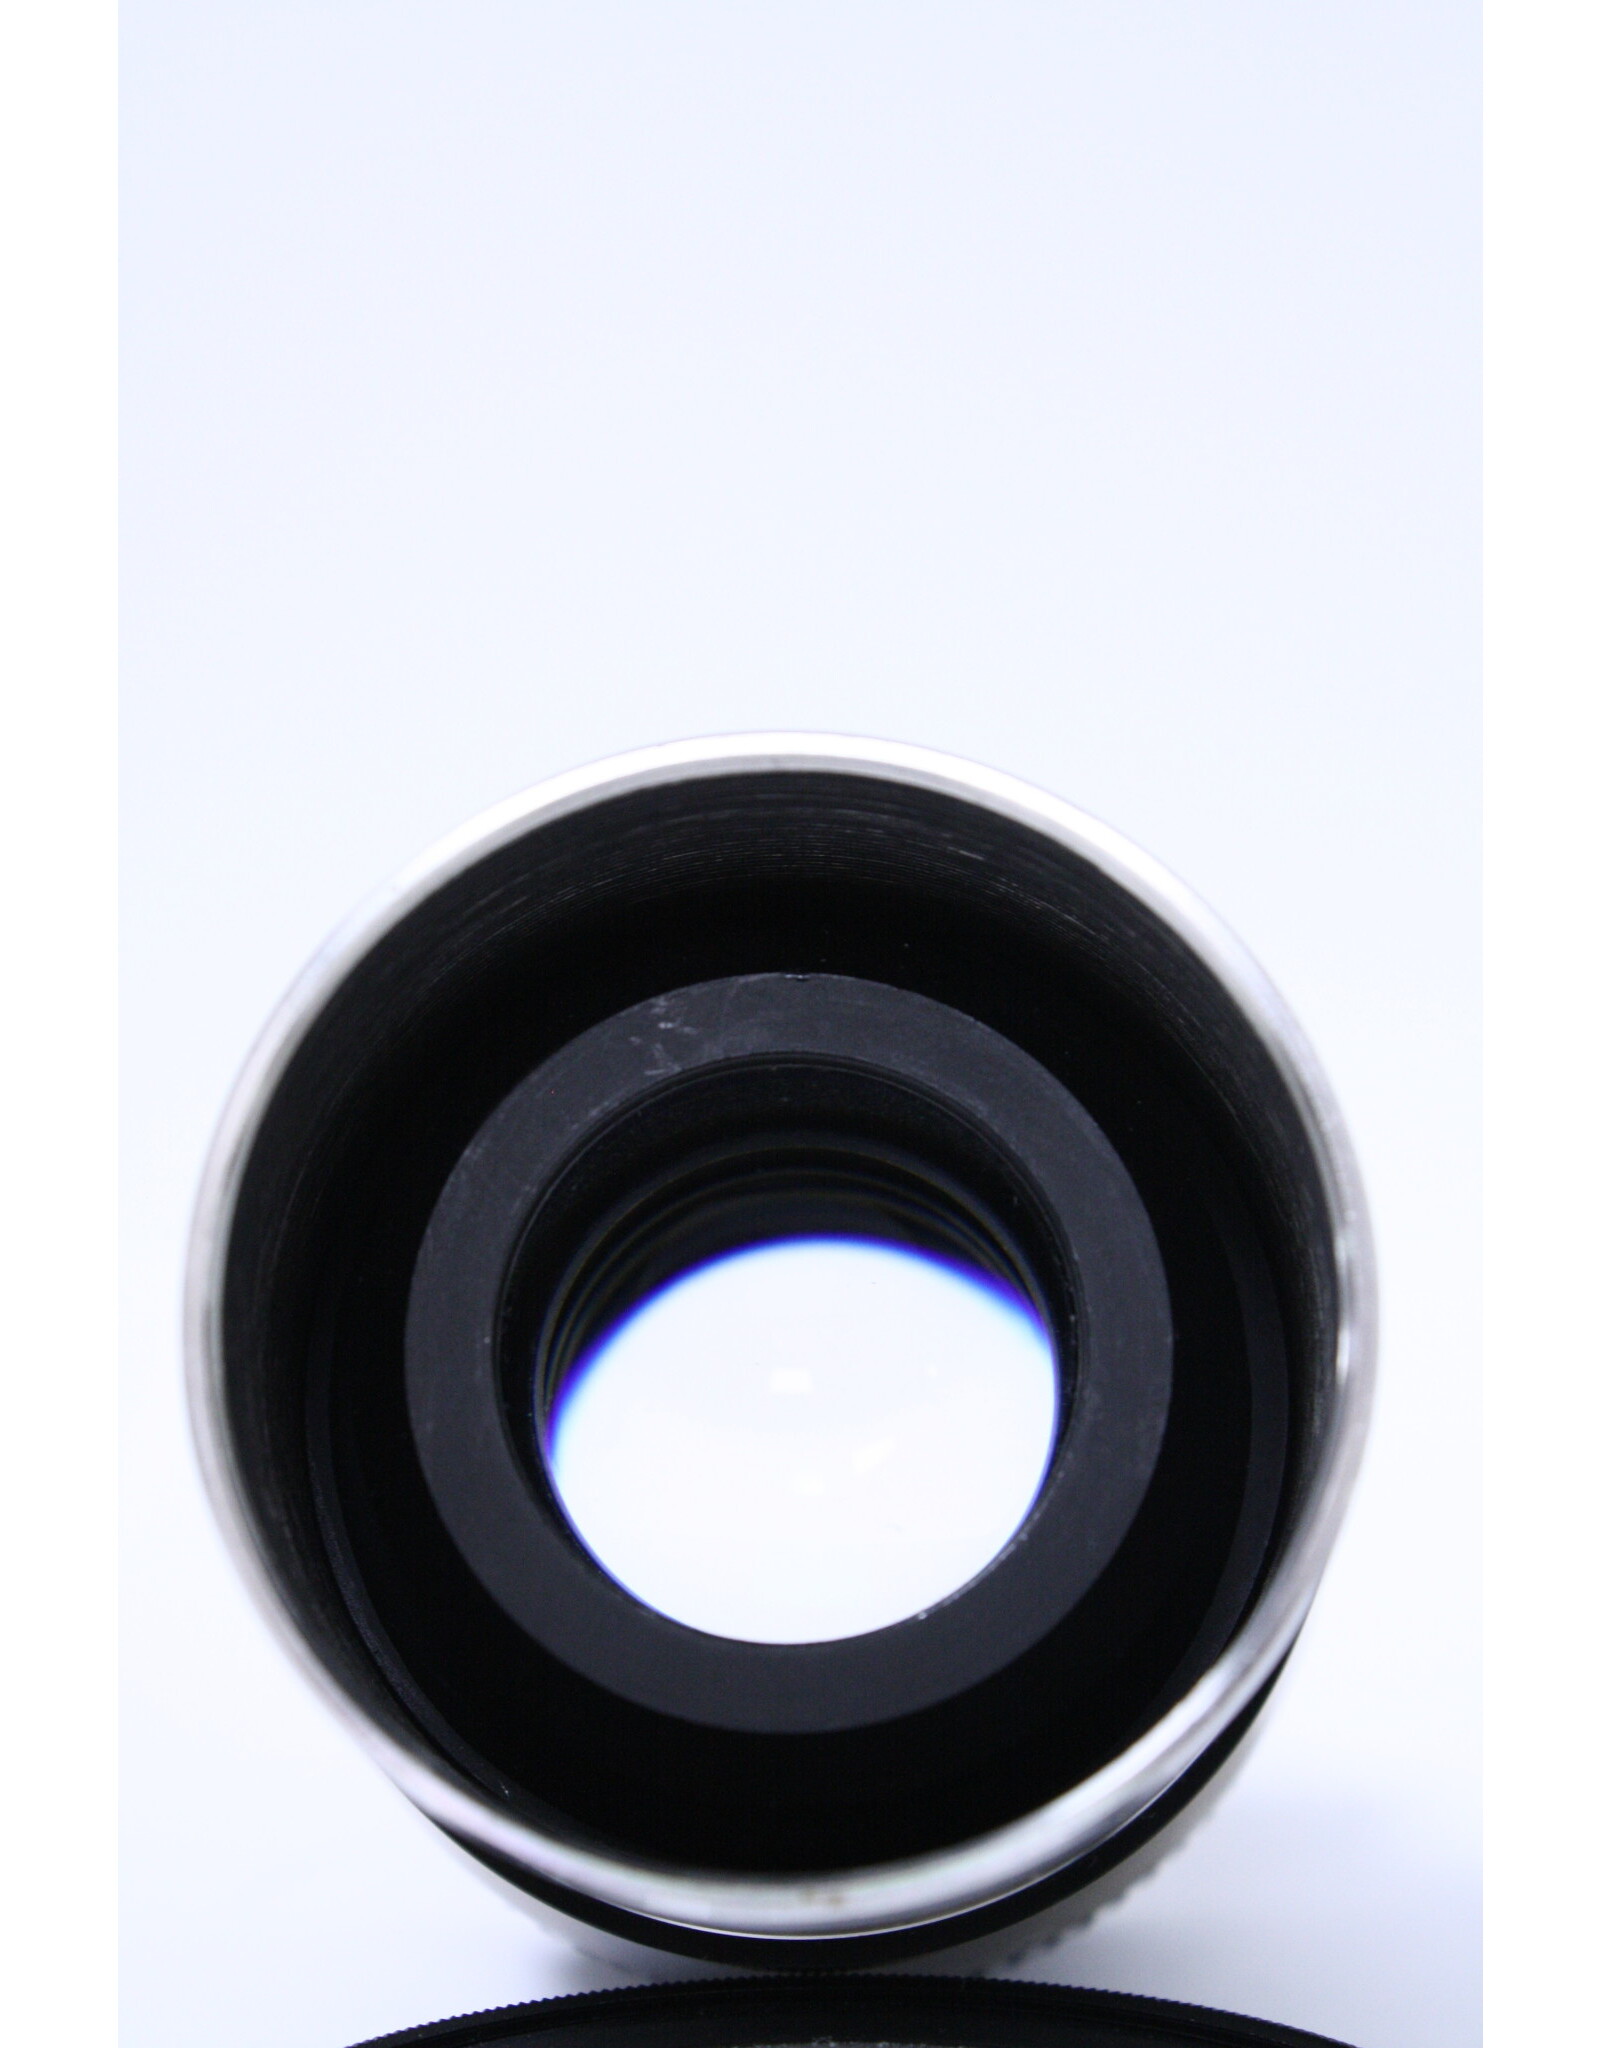 Explore Scientific Explore Scientific 2" - 18 mm Argon Purged 82° Waterproof Eyepiece (Pre-owned)